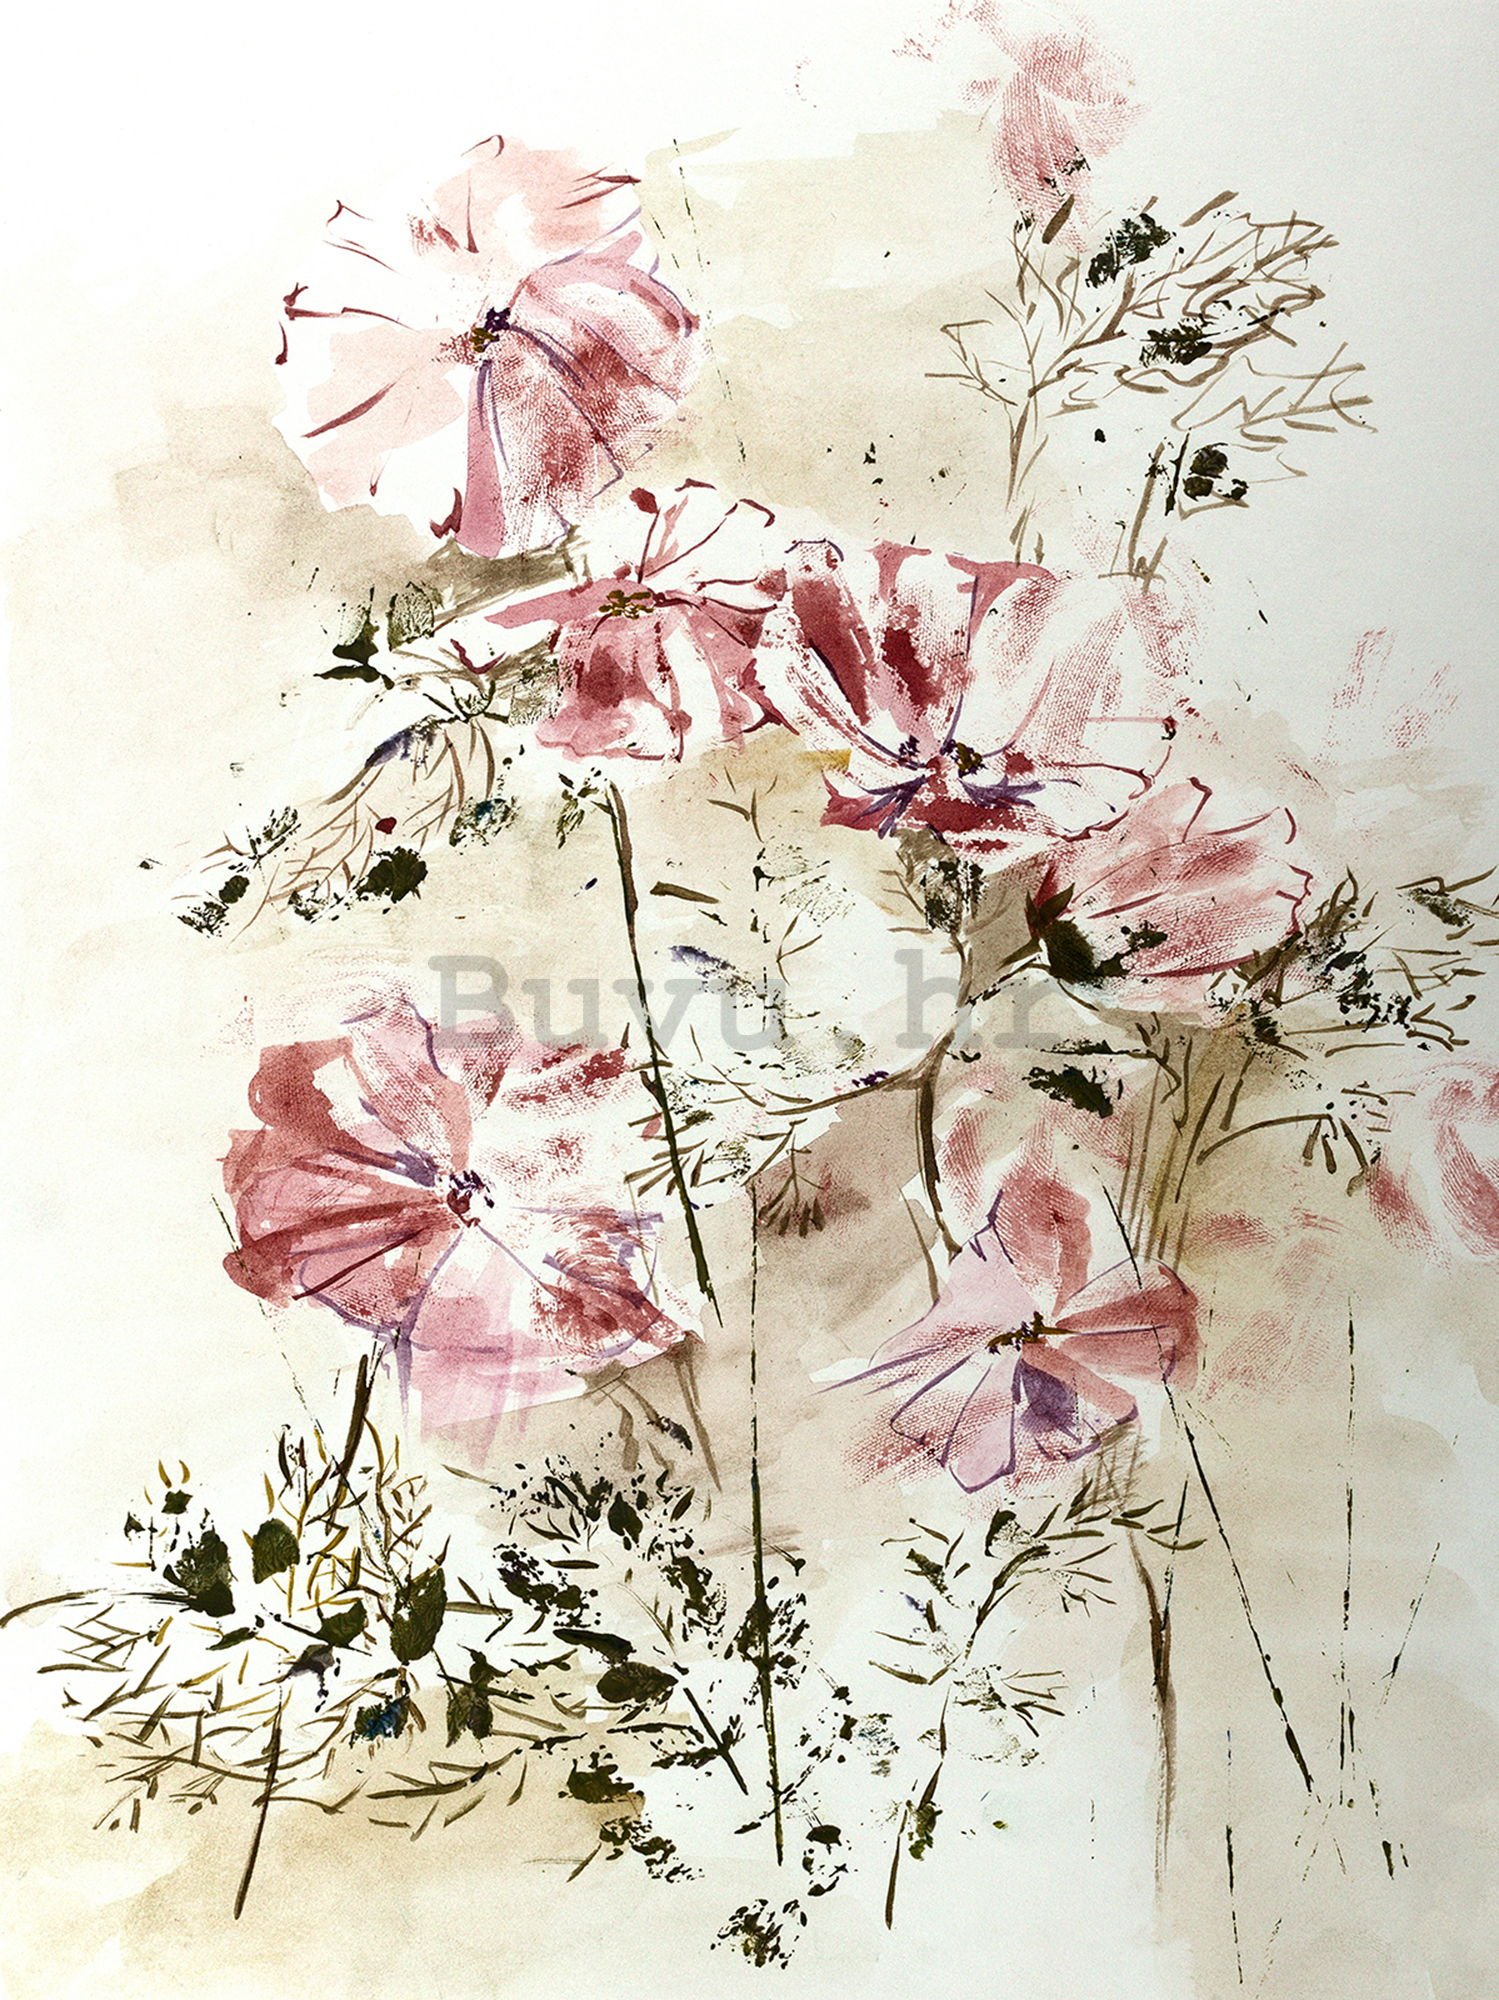 Foto tapeta Vlies: Cvijeće (1) - 206x275 cm